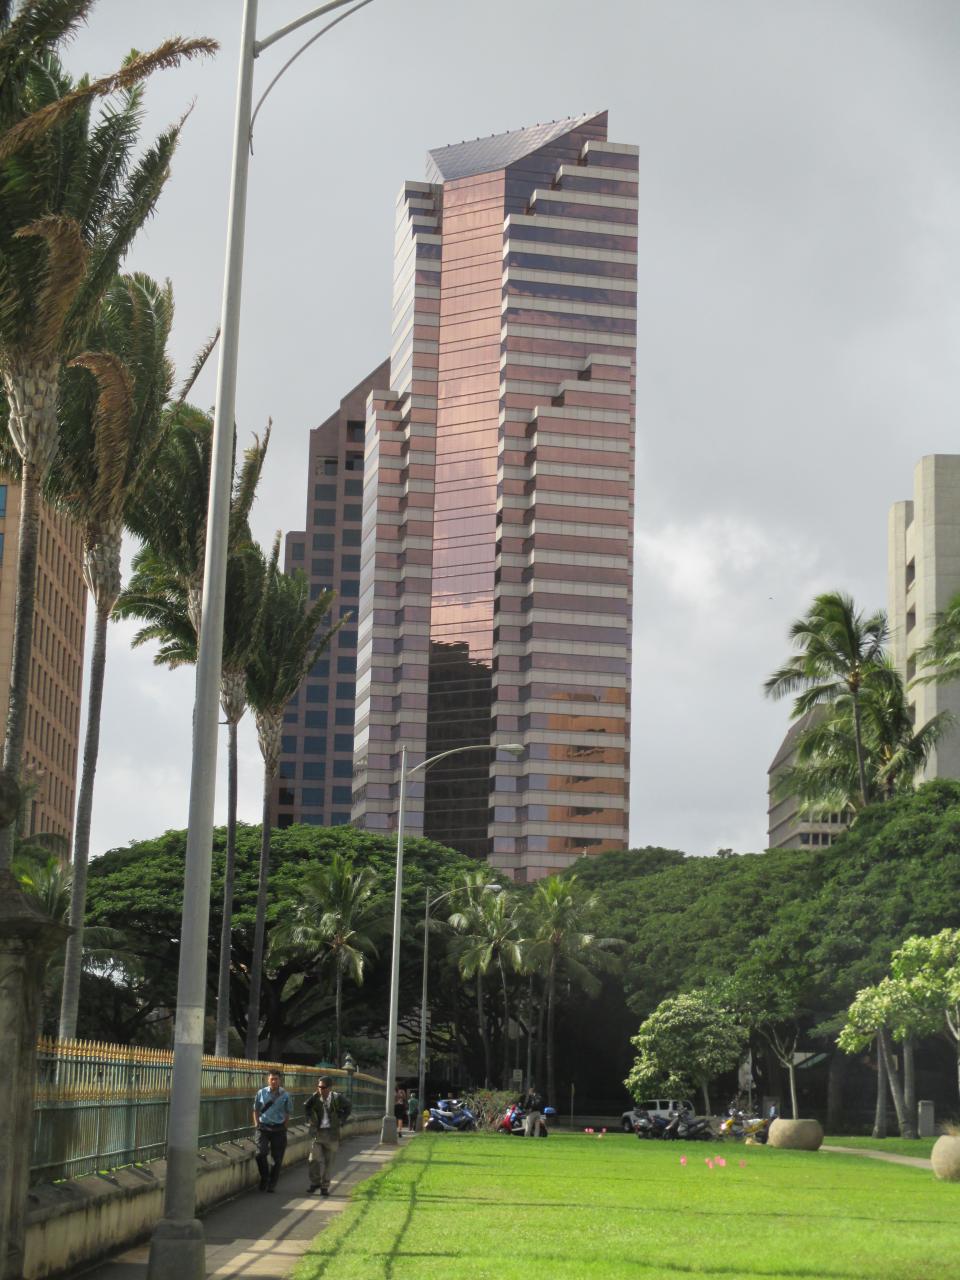 Tallest Buildings in Honolulu